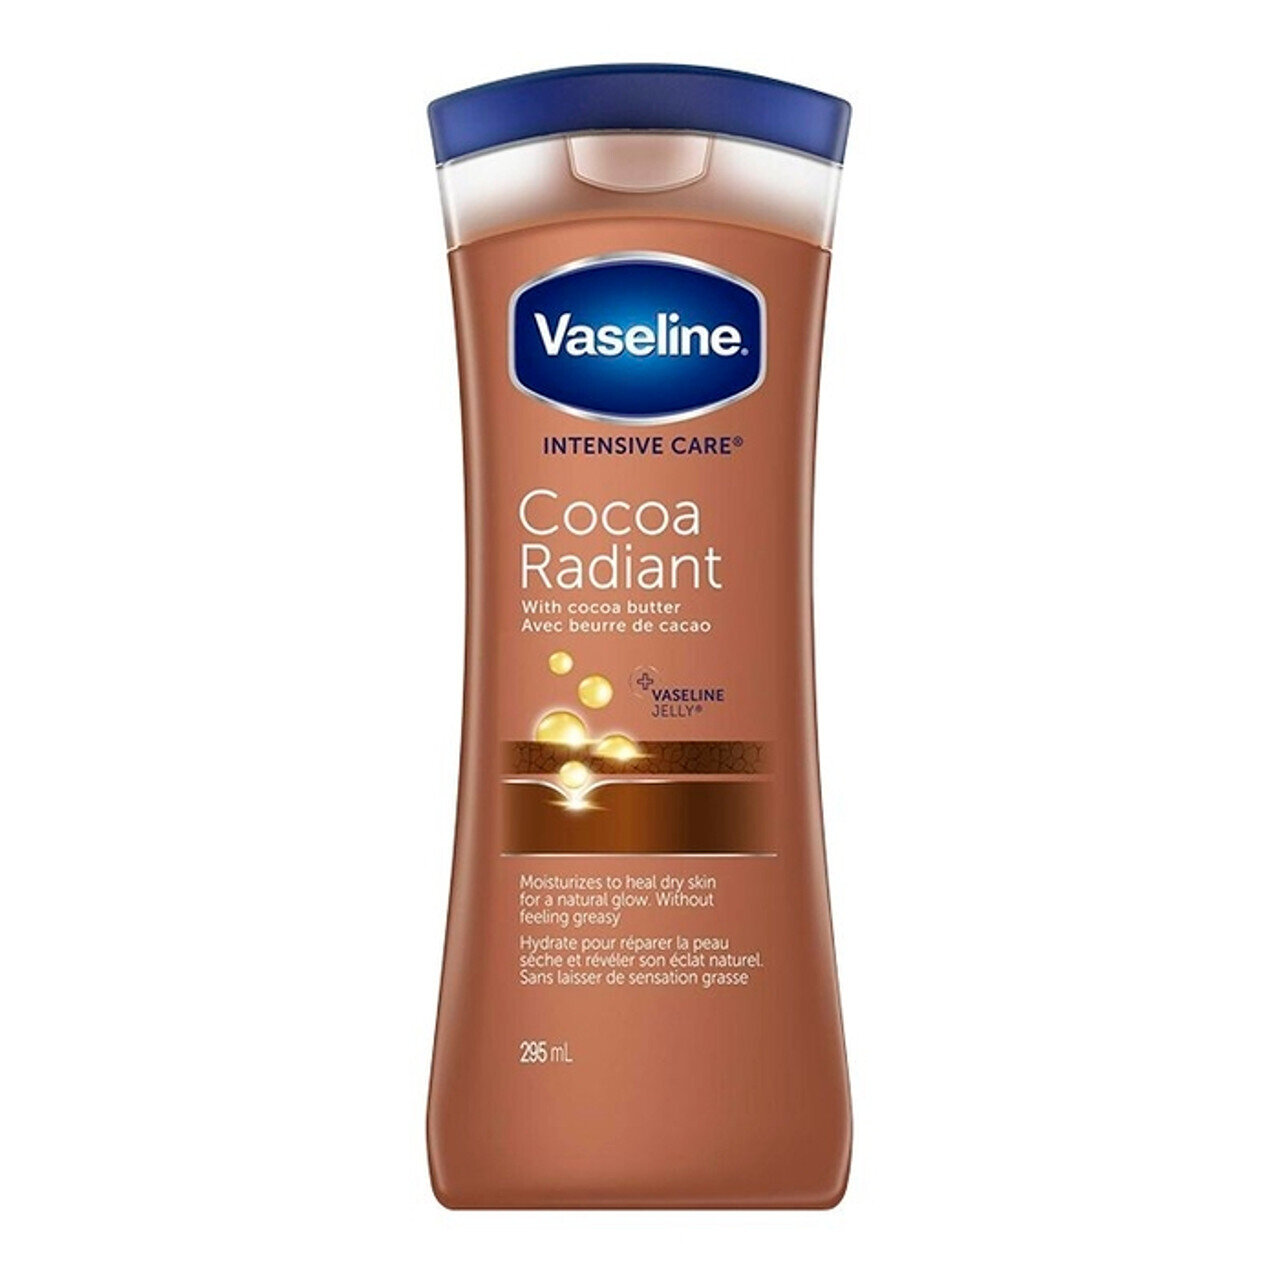 Vaseline Intensive Care Cocoa Radiant, 295 ml